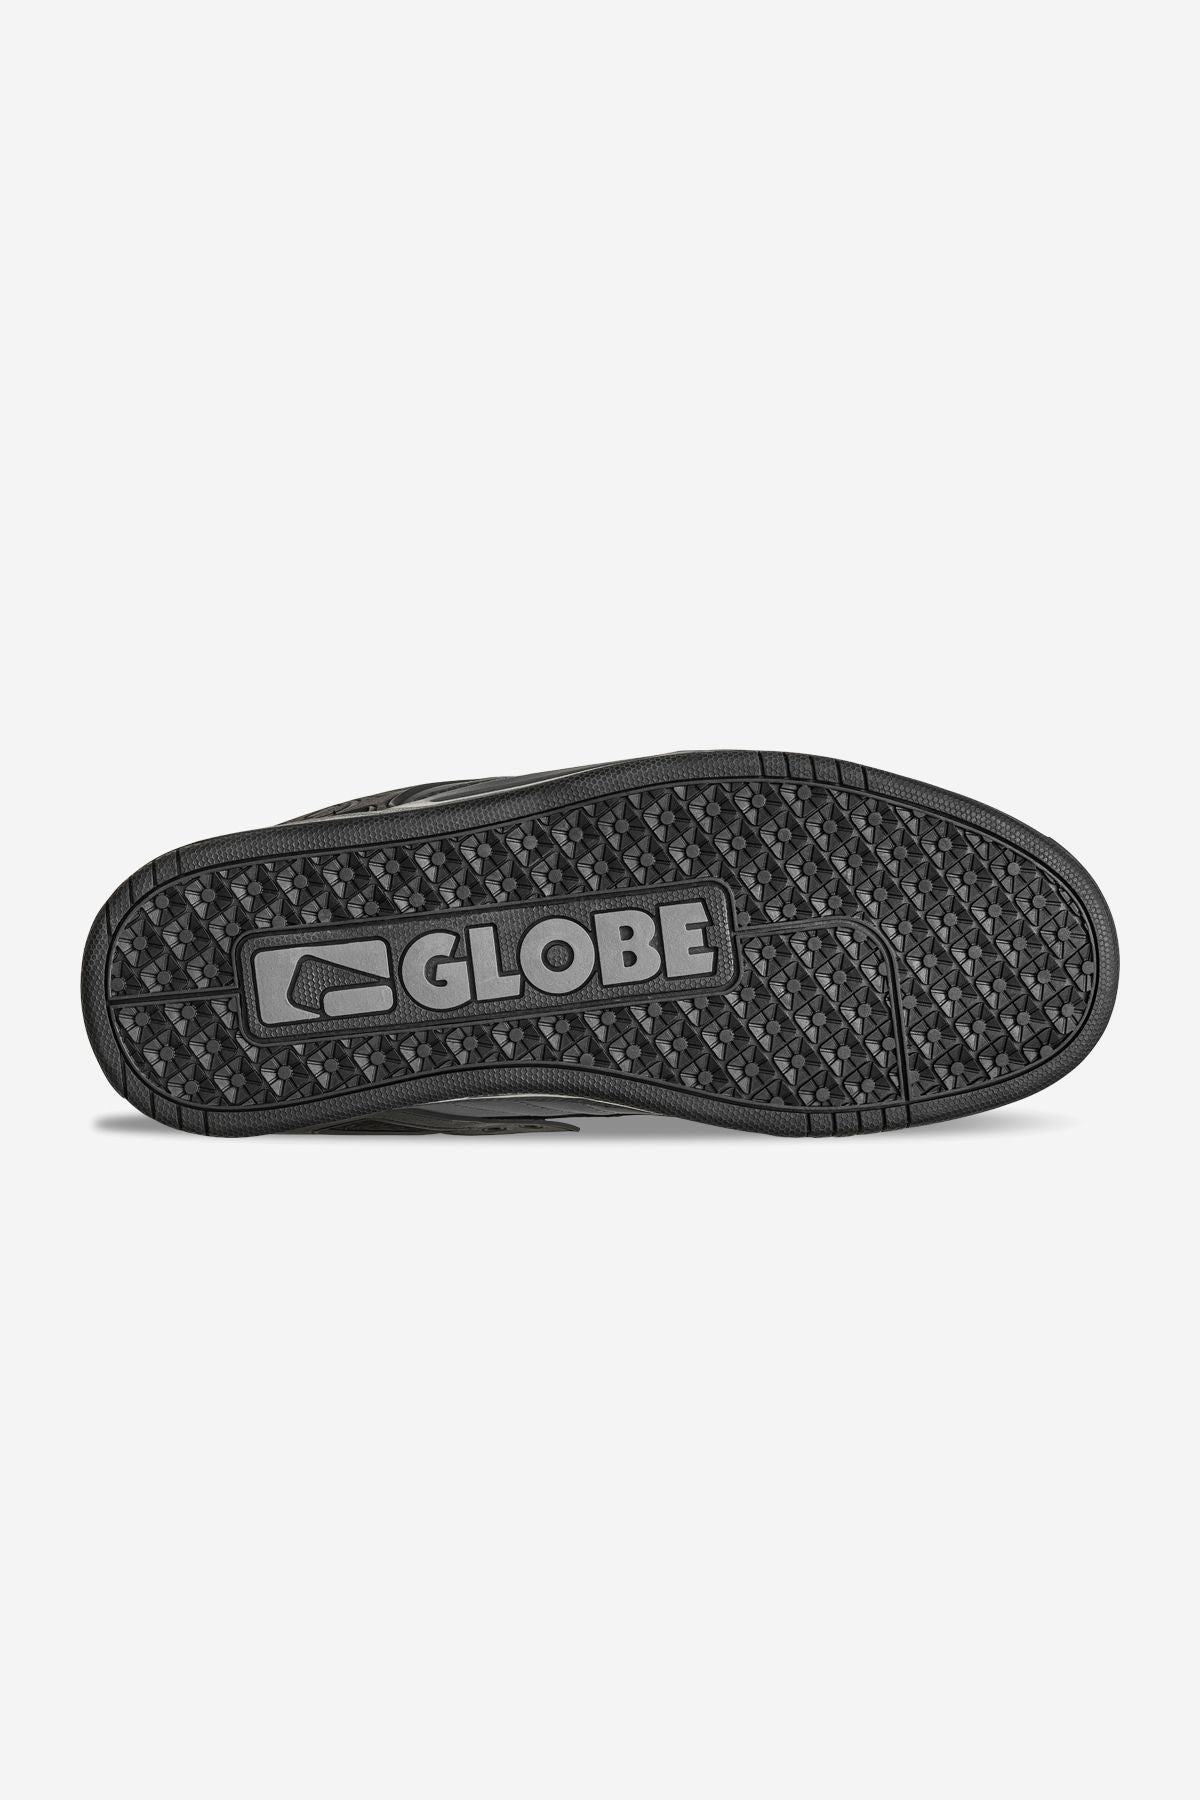 Globe - Tilt - Dark Shadow/Phantom - skateboard Schuhe